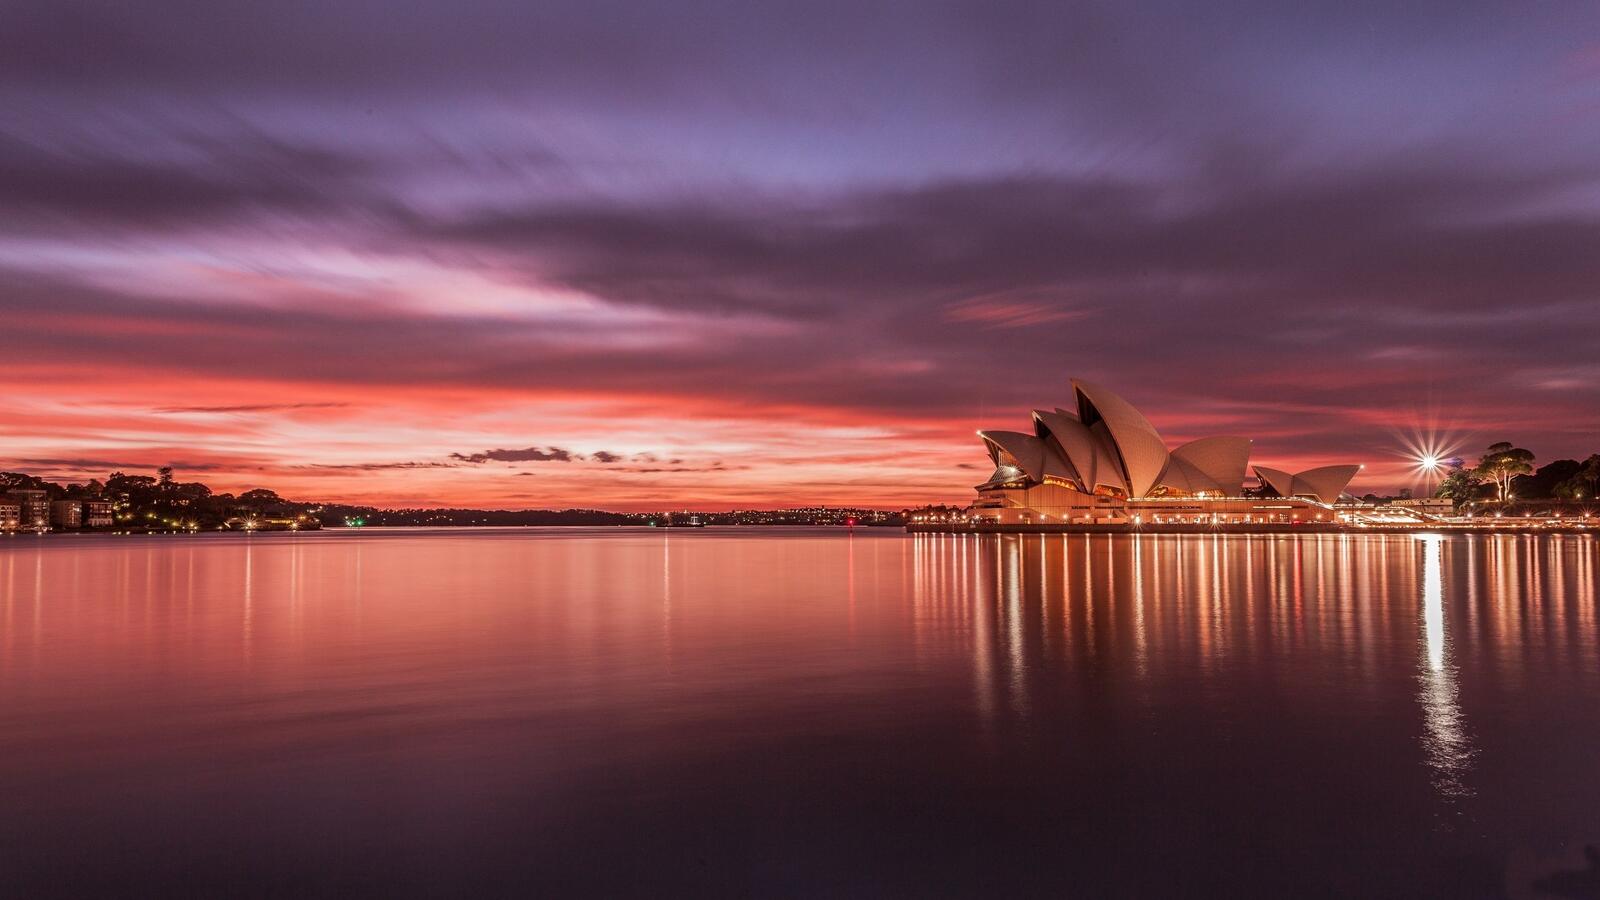 Wallpapers Australia picturesque sunset on the desktop